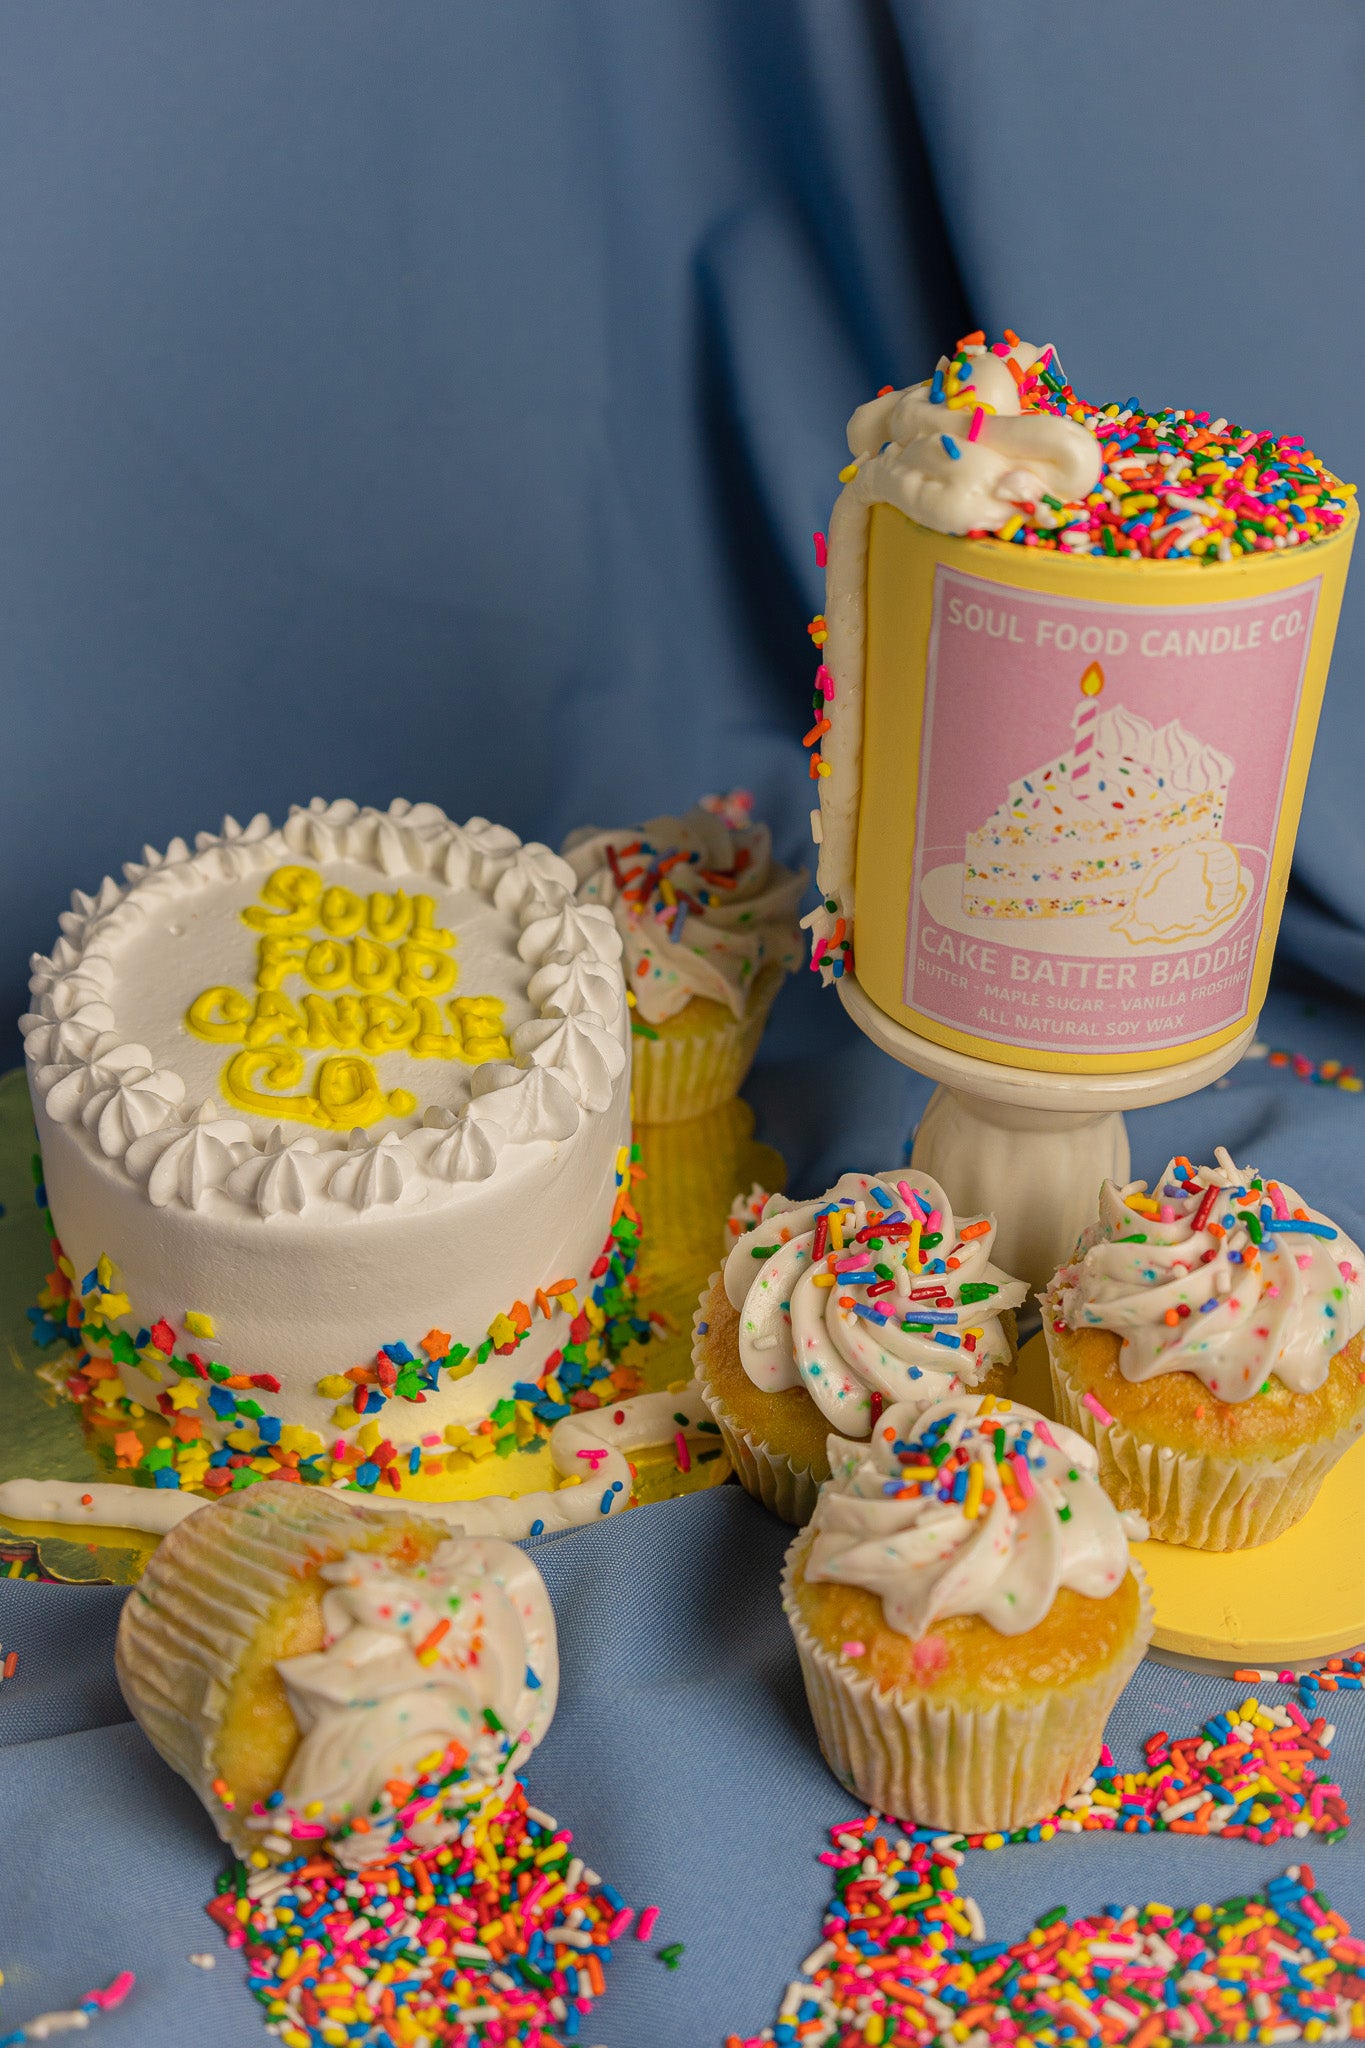 Cake Batter Baddie - Soul Food Candle Company